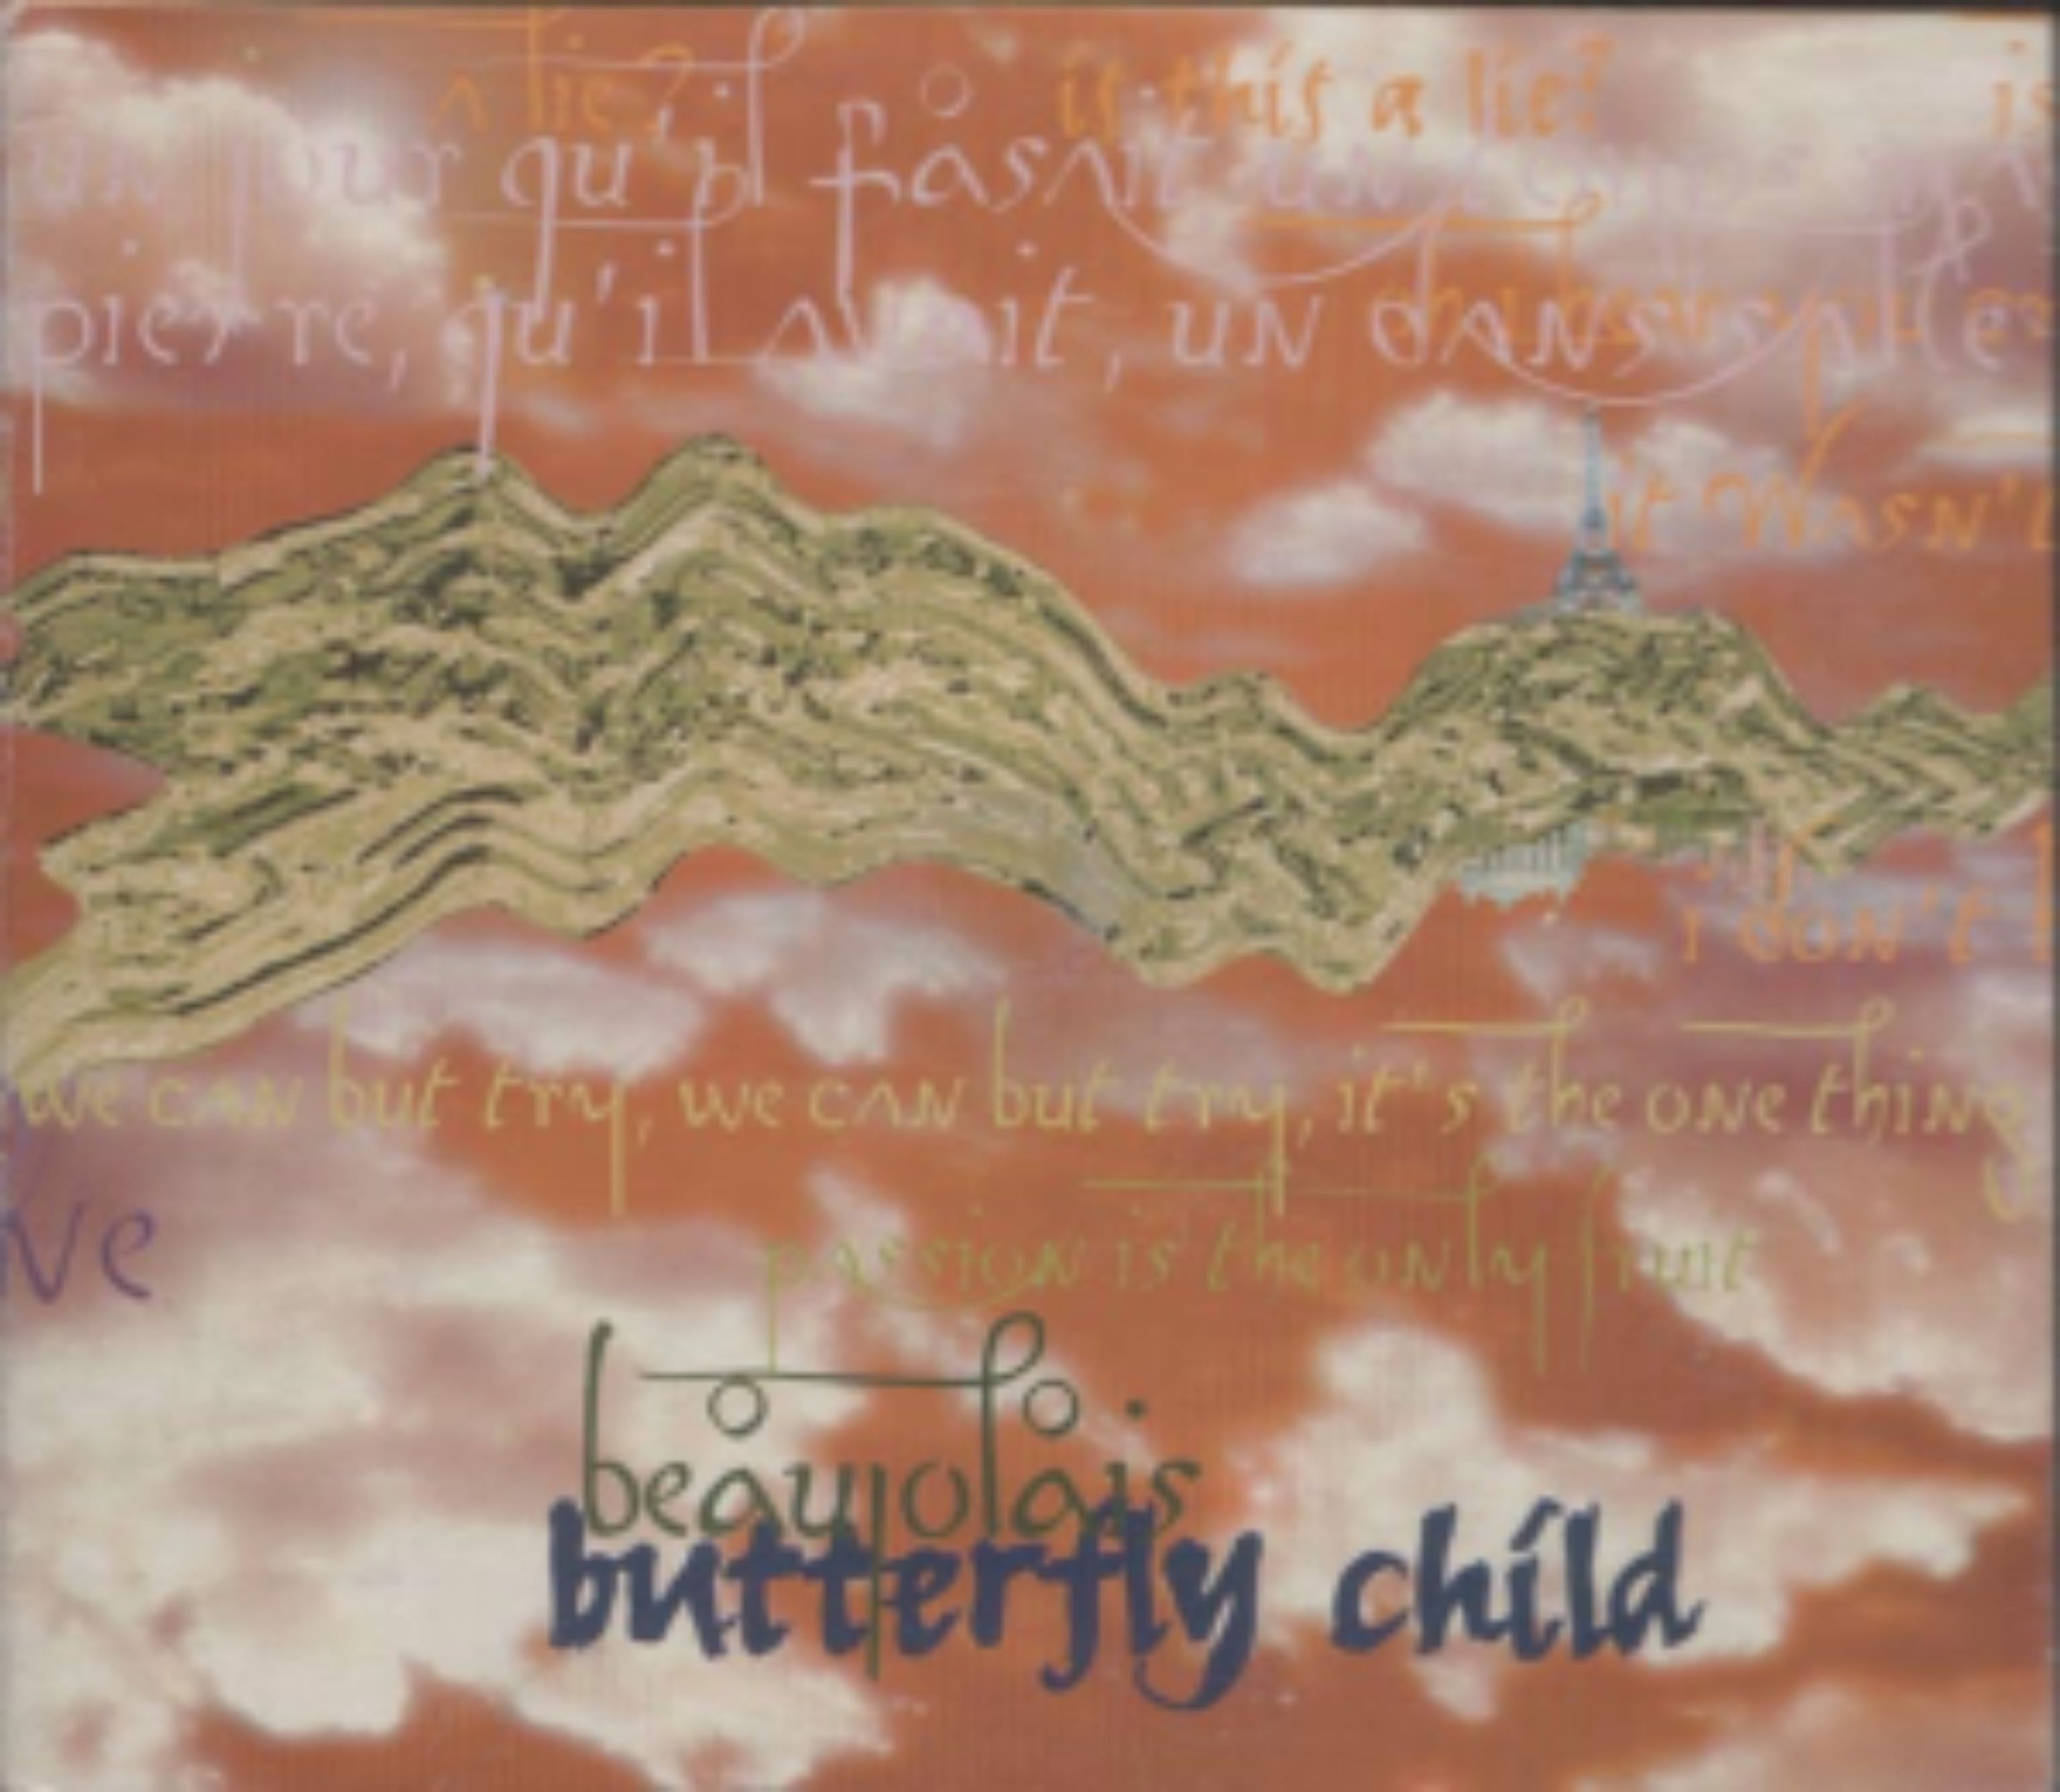 Beaujolais butterfly child